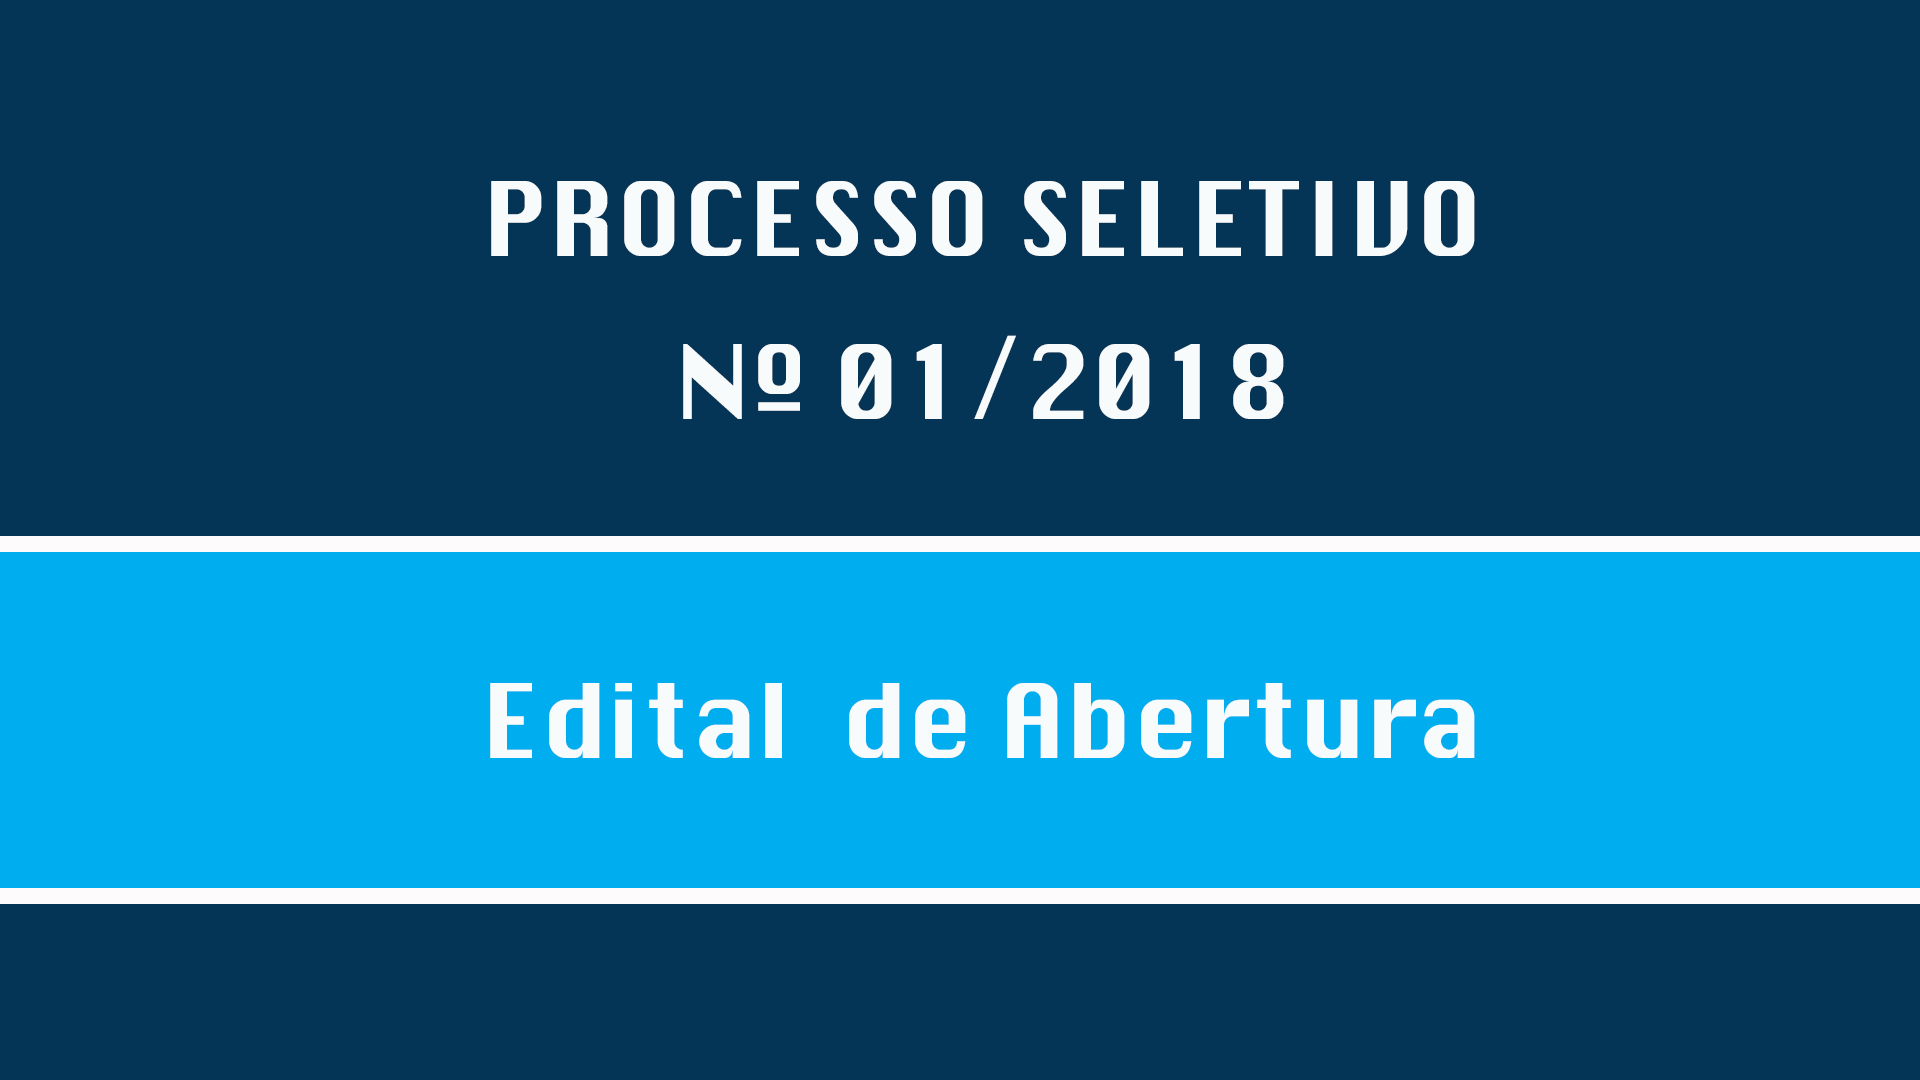 PROCESSO SELETIVO Nº 001/2018